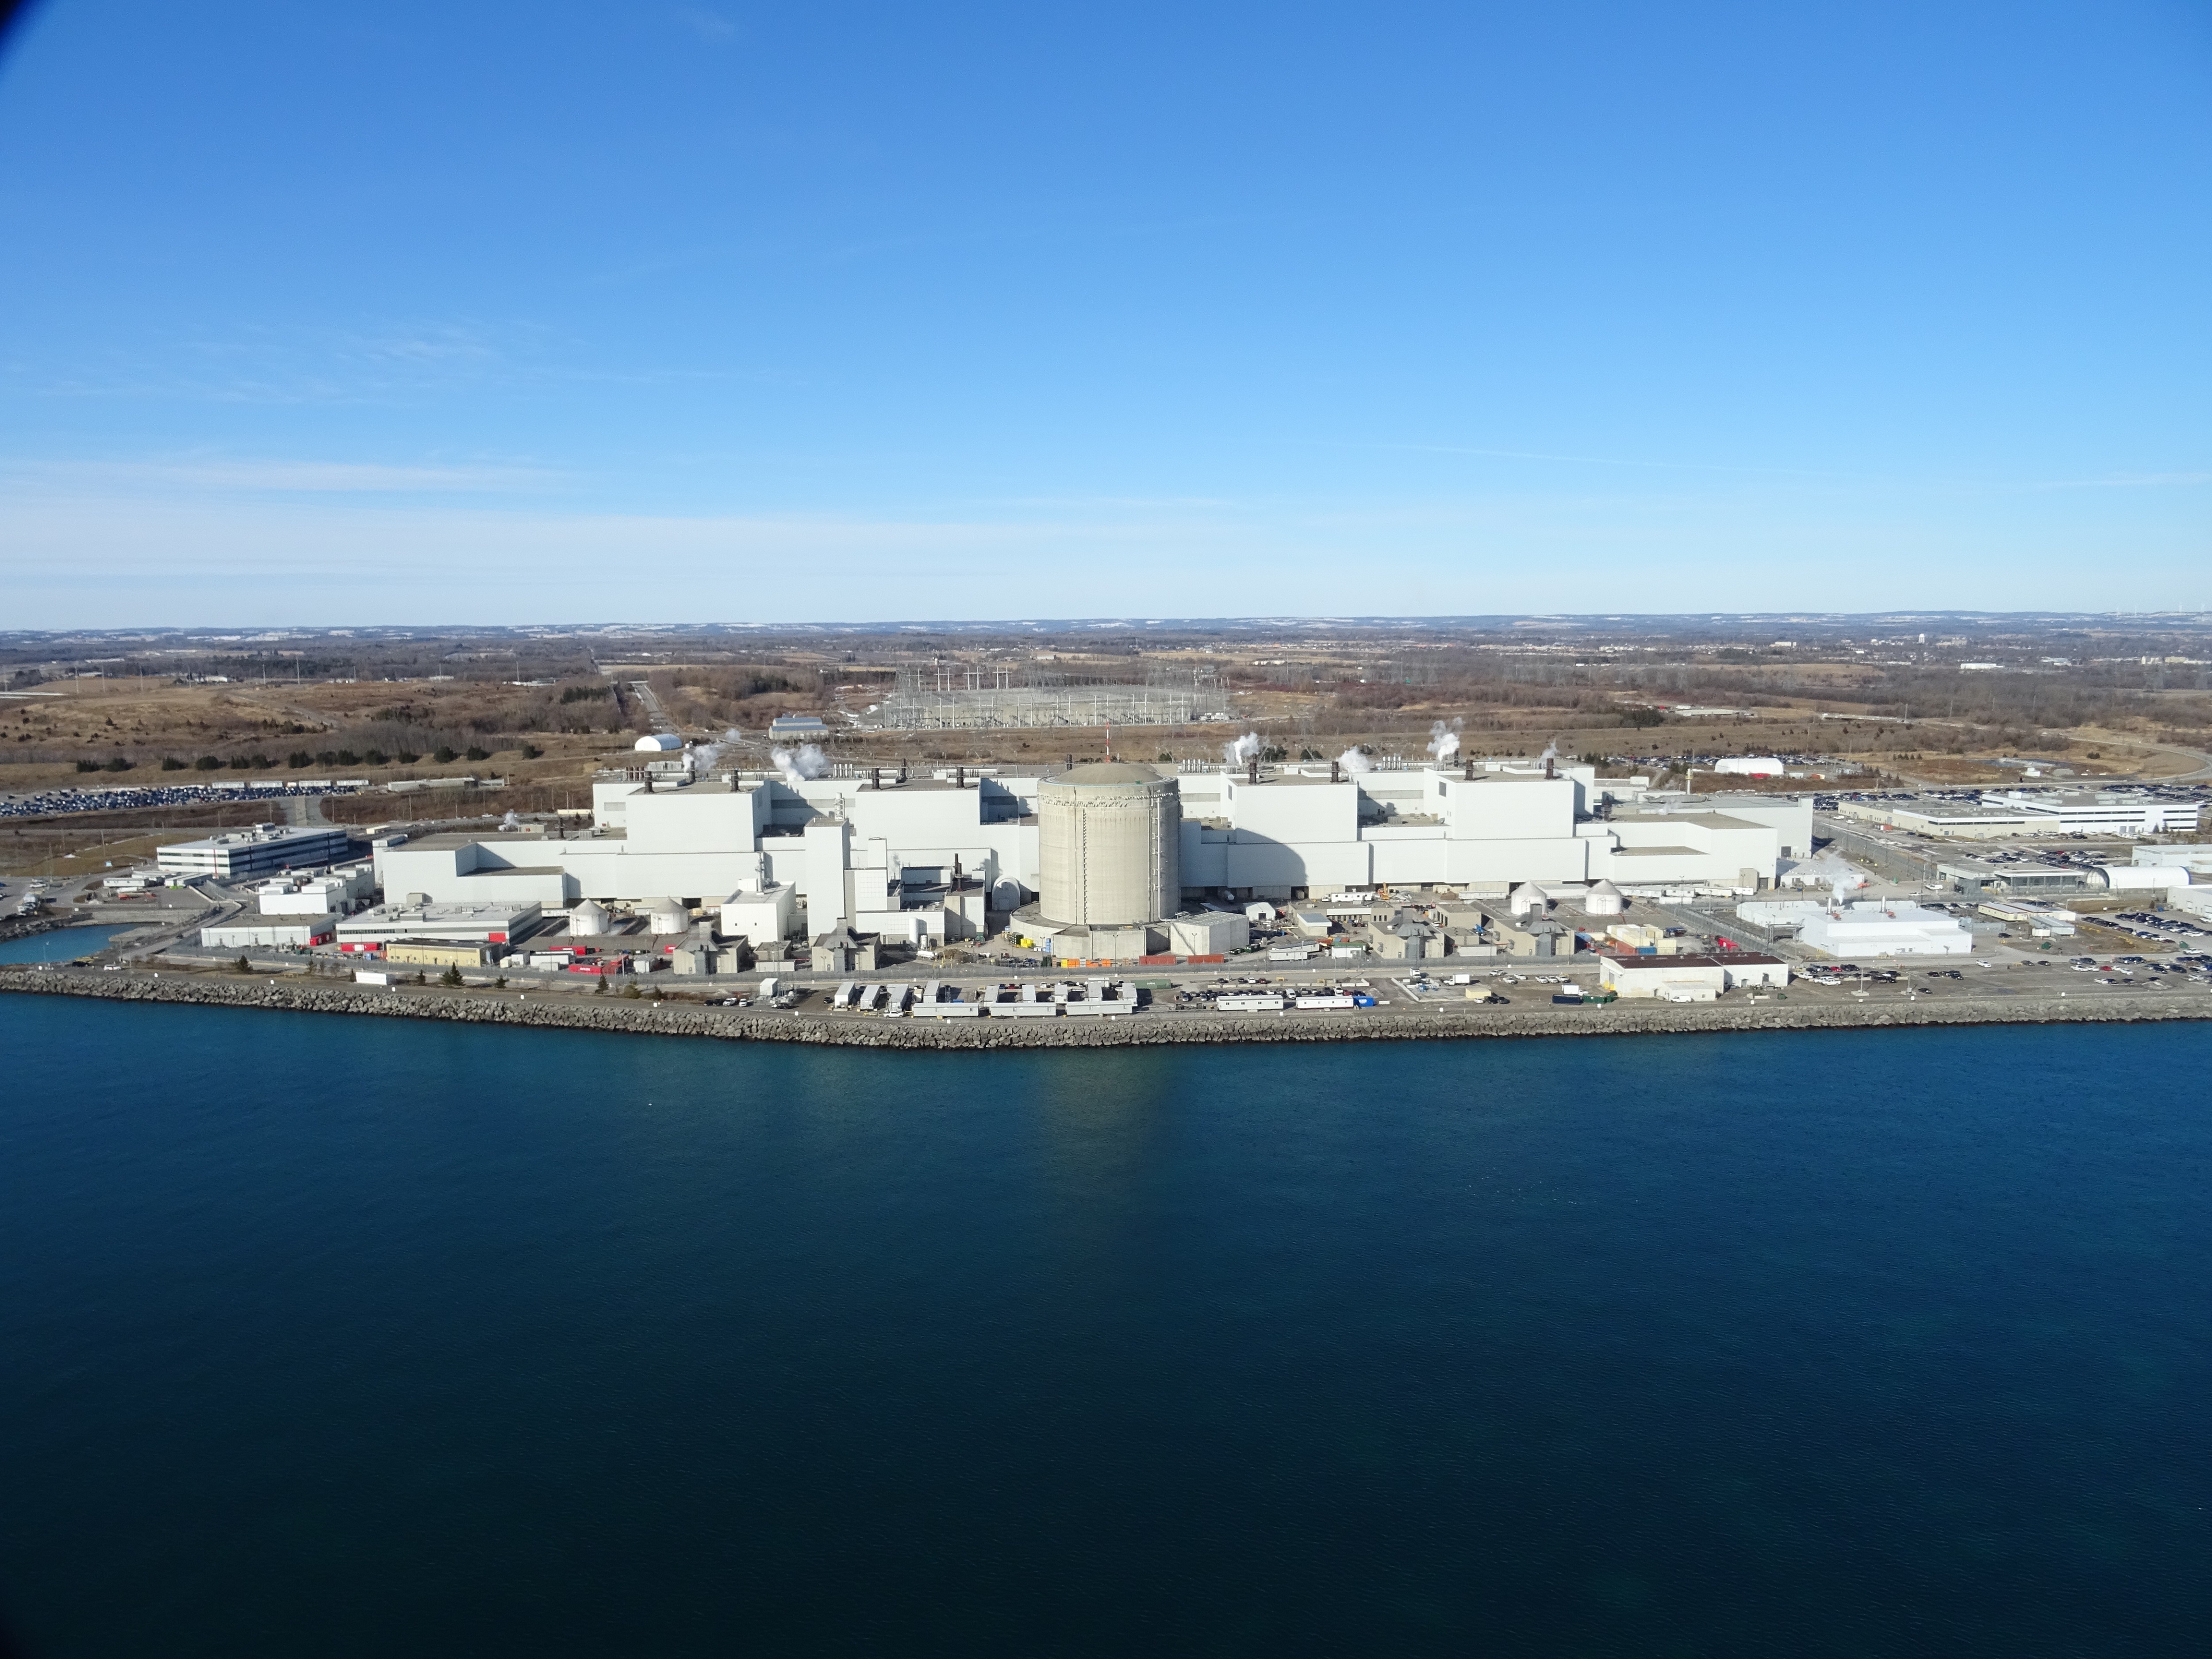 Darlington Nuclear Generating Station